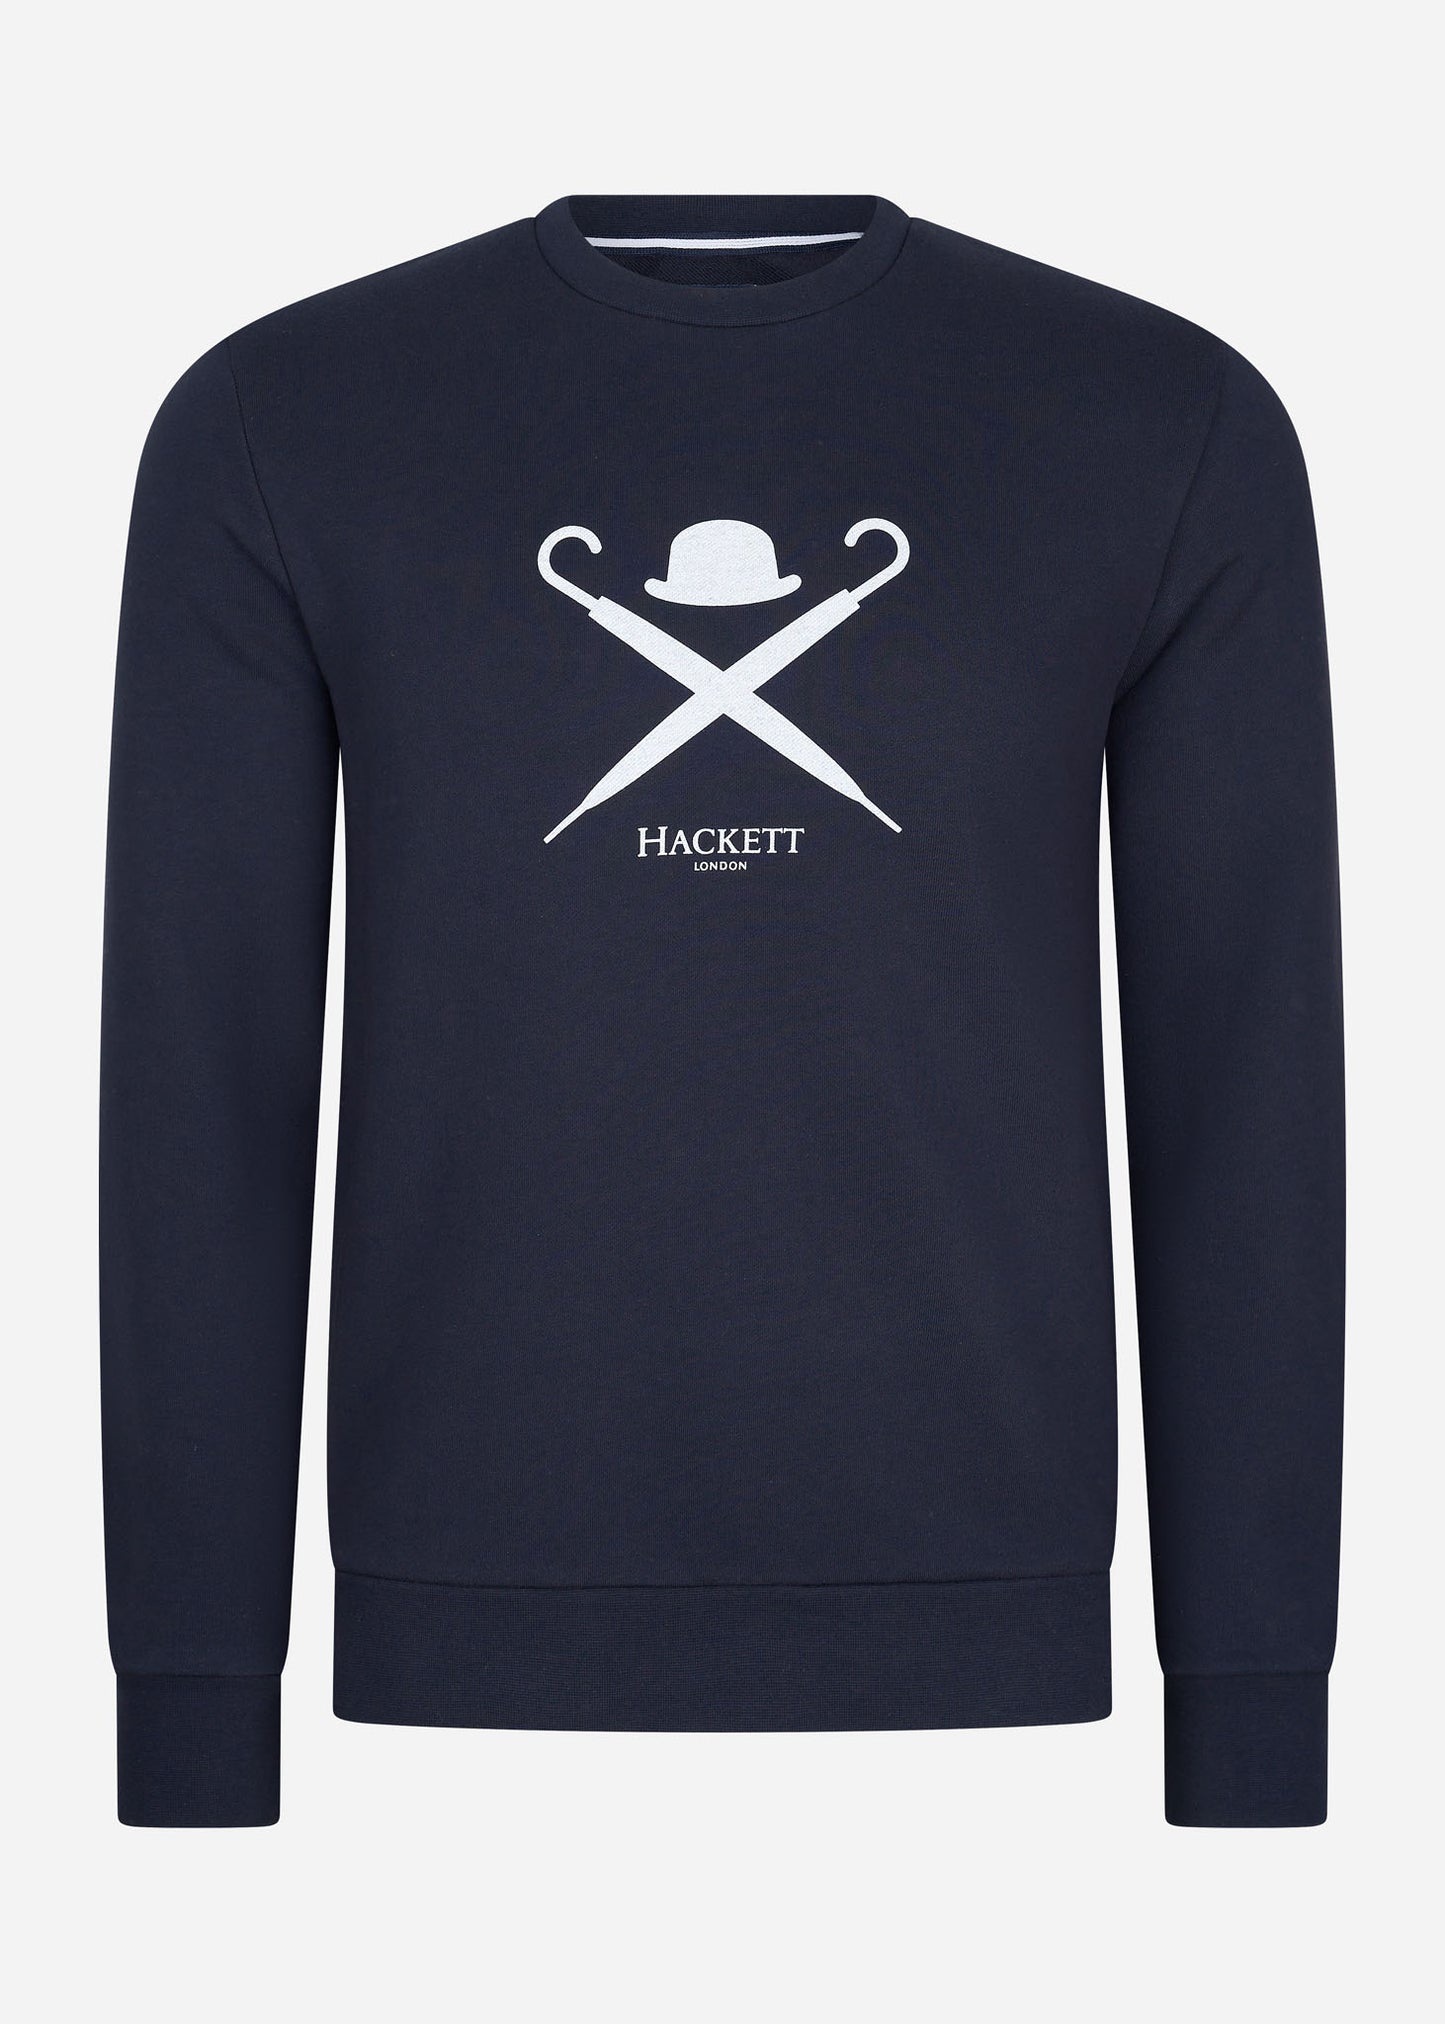 logo sweatshirt trui hackett london navy